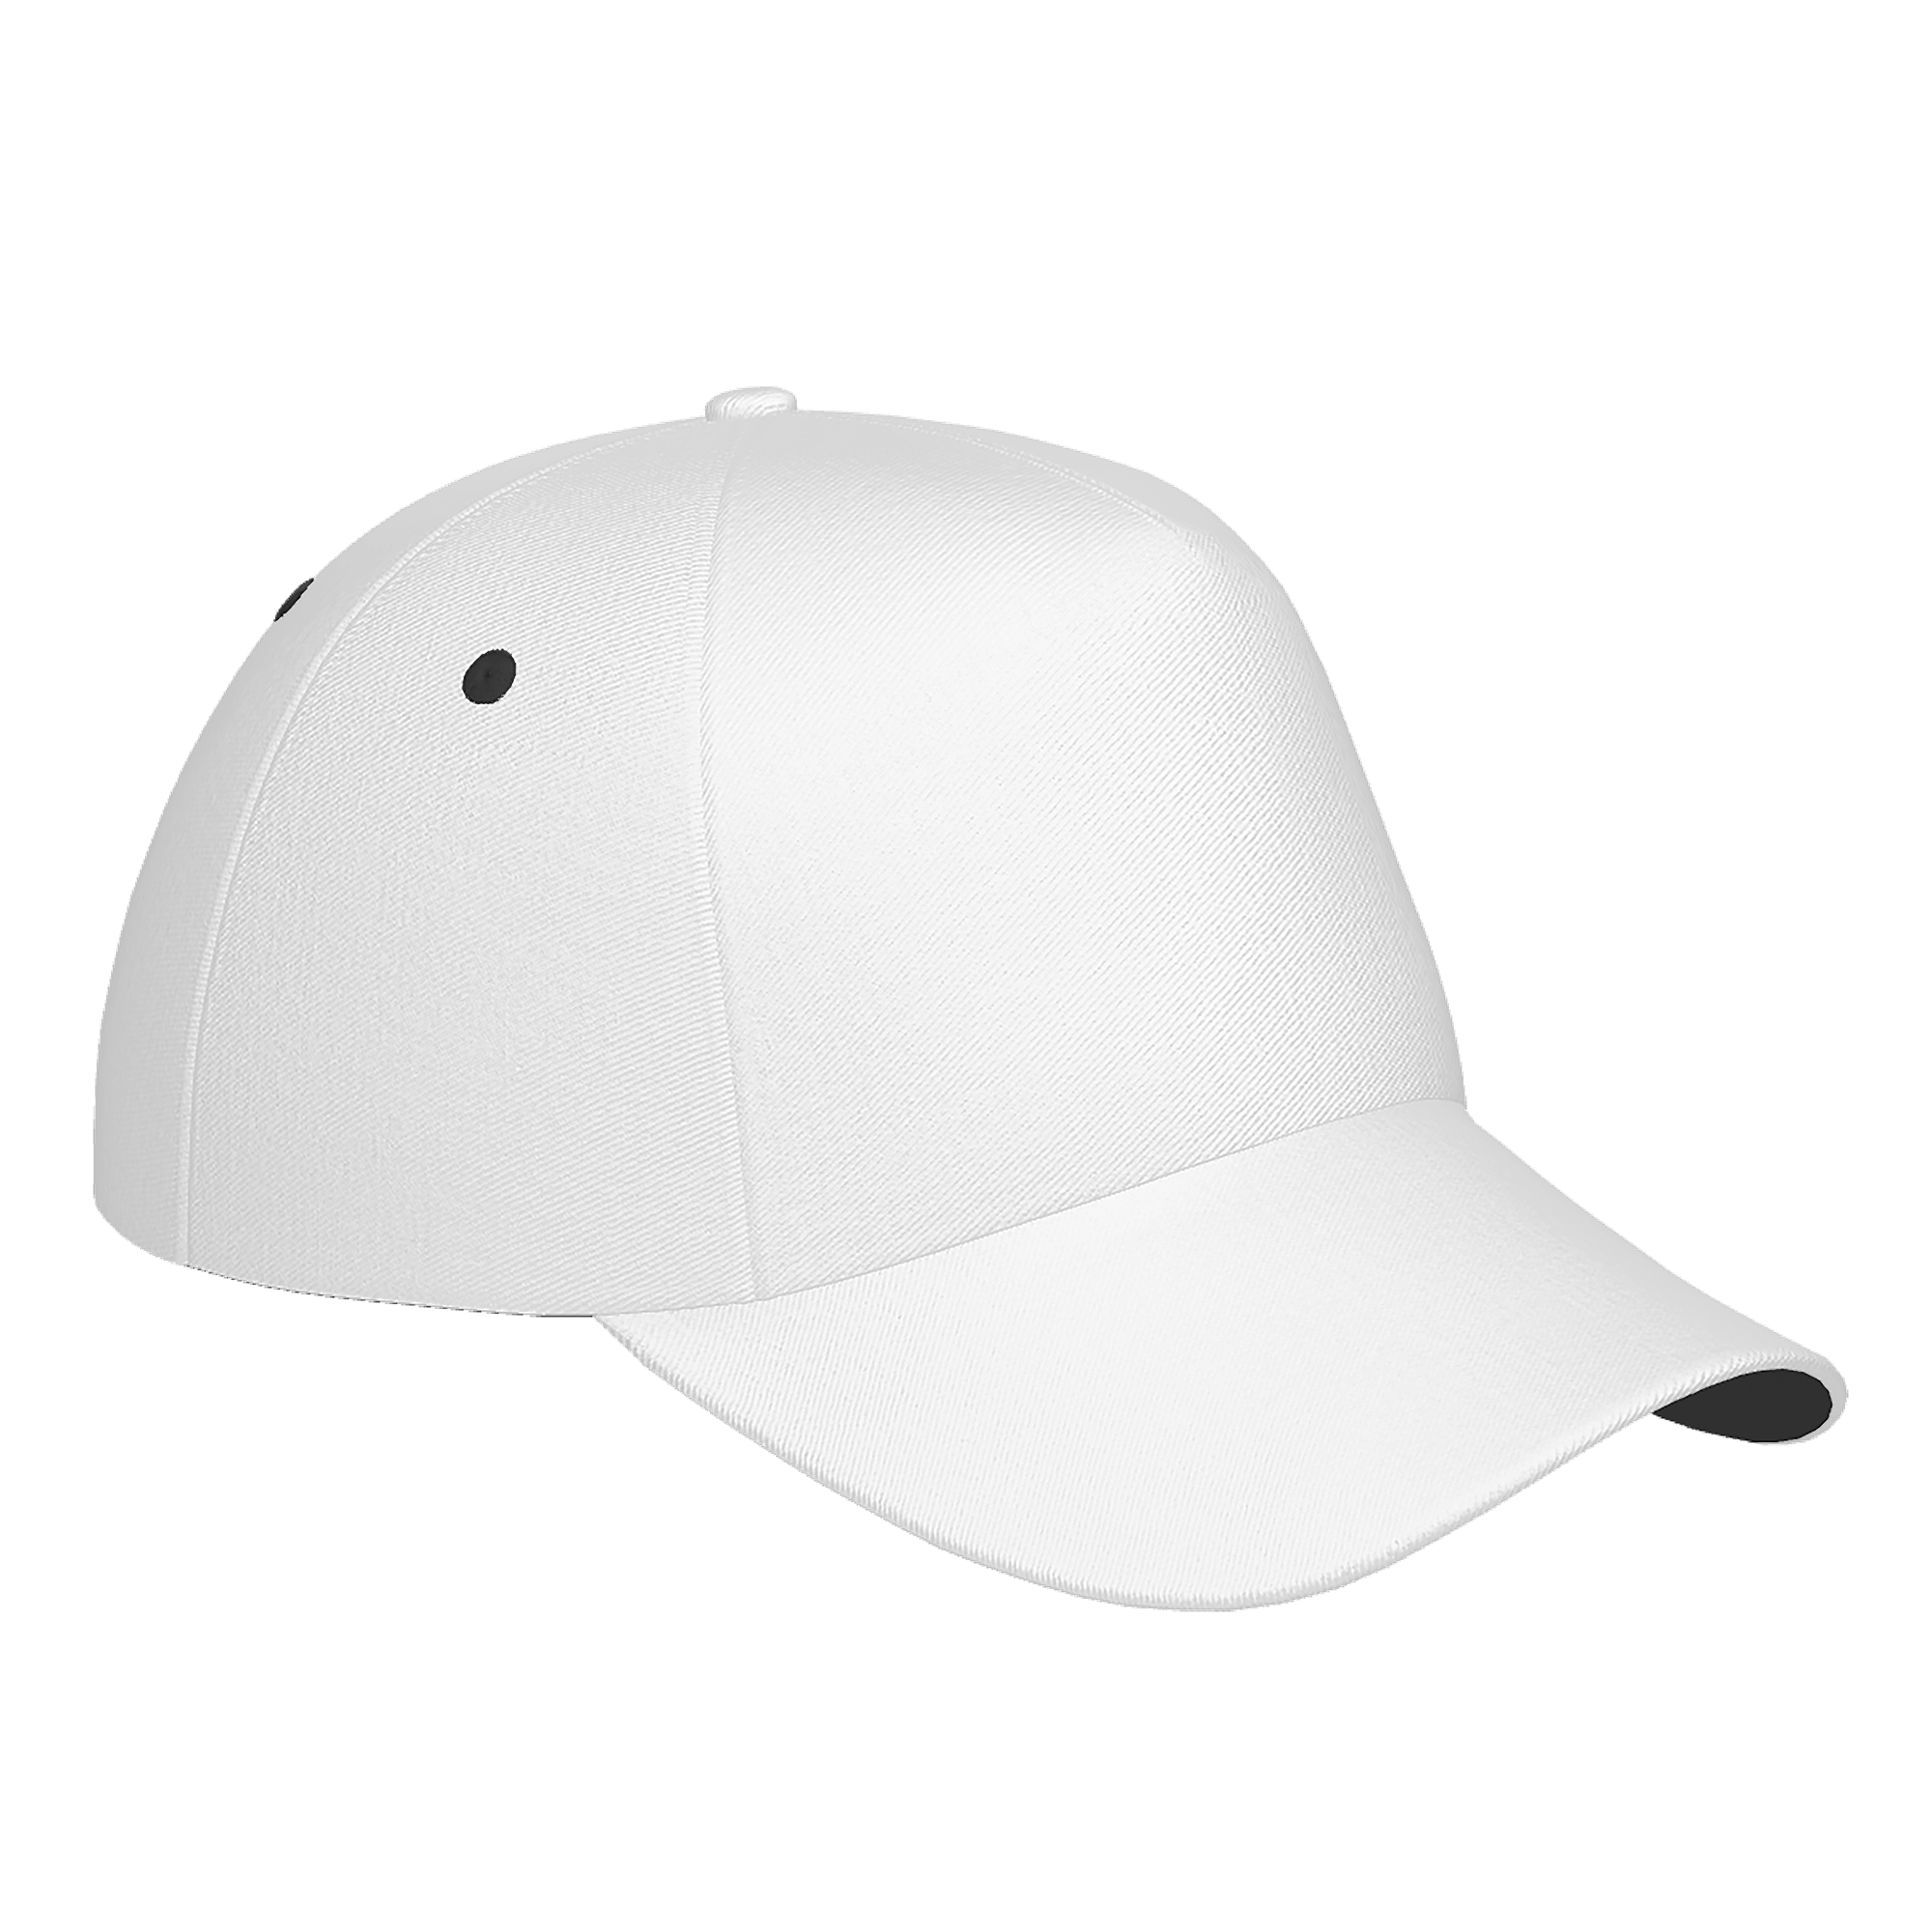 Customizable Curved Brim Baseball Cap